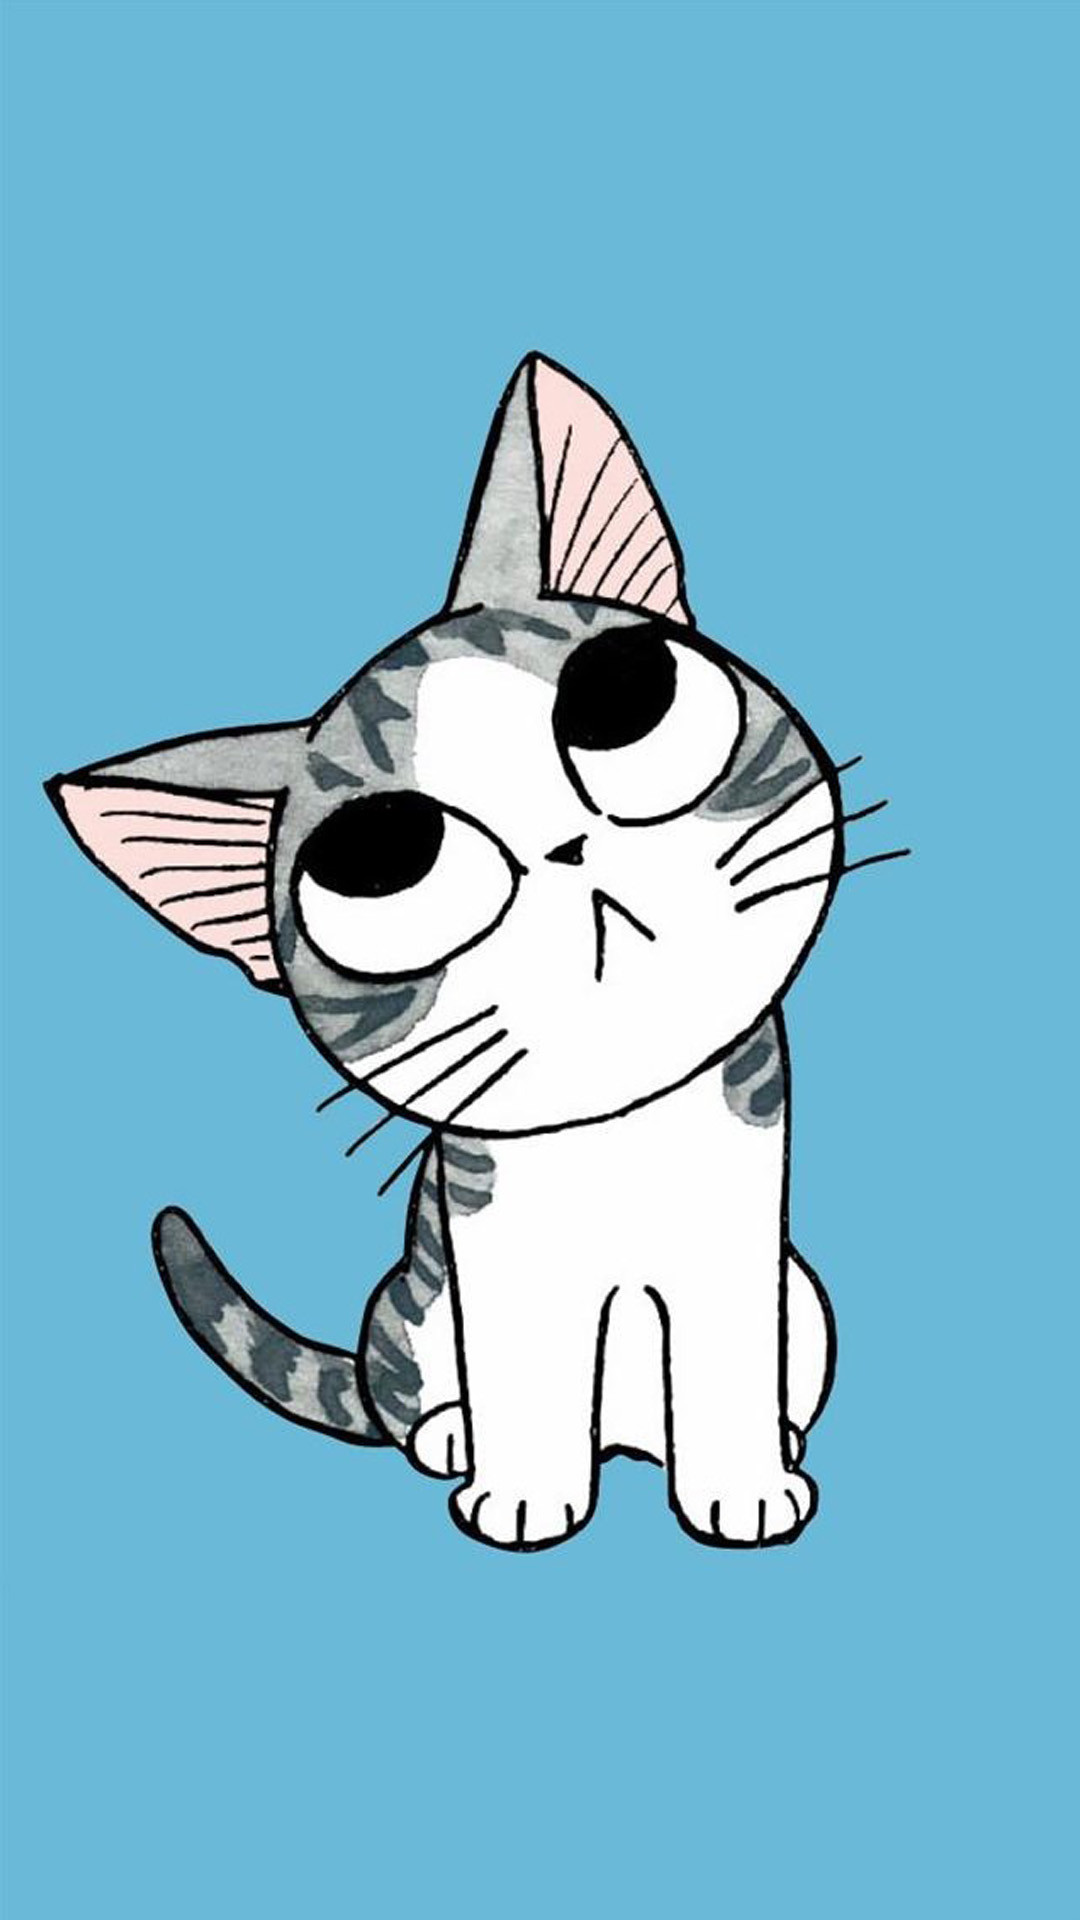 1080x1920 Cute Cartoon Kitten â Find more kawaii Android + iPhone wallpapers  @prettywallpaper